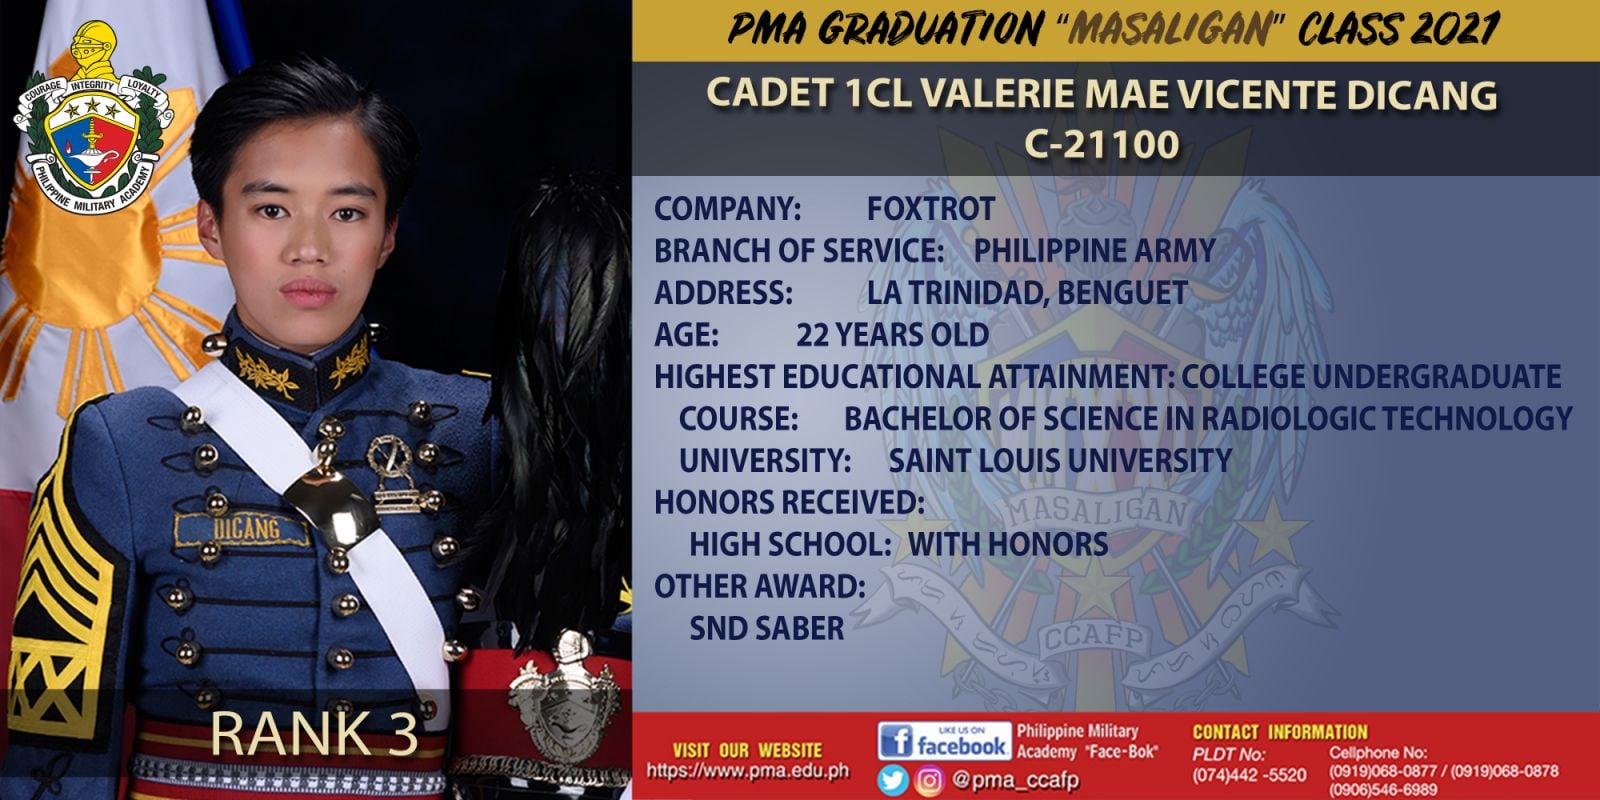 UP Visayas grad tops Philippine Military Academy Masaligan Class 2021 3